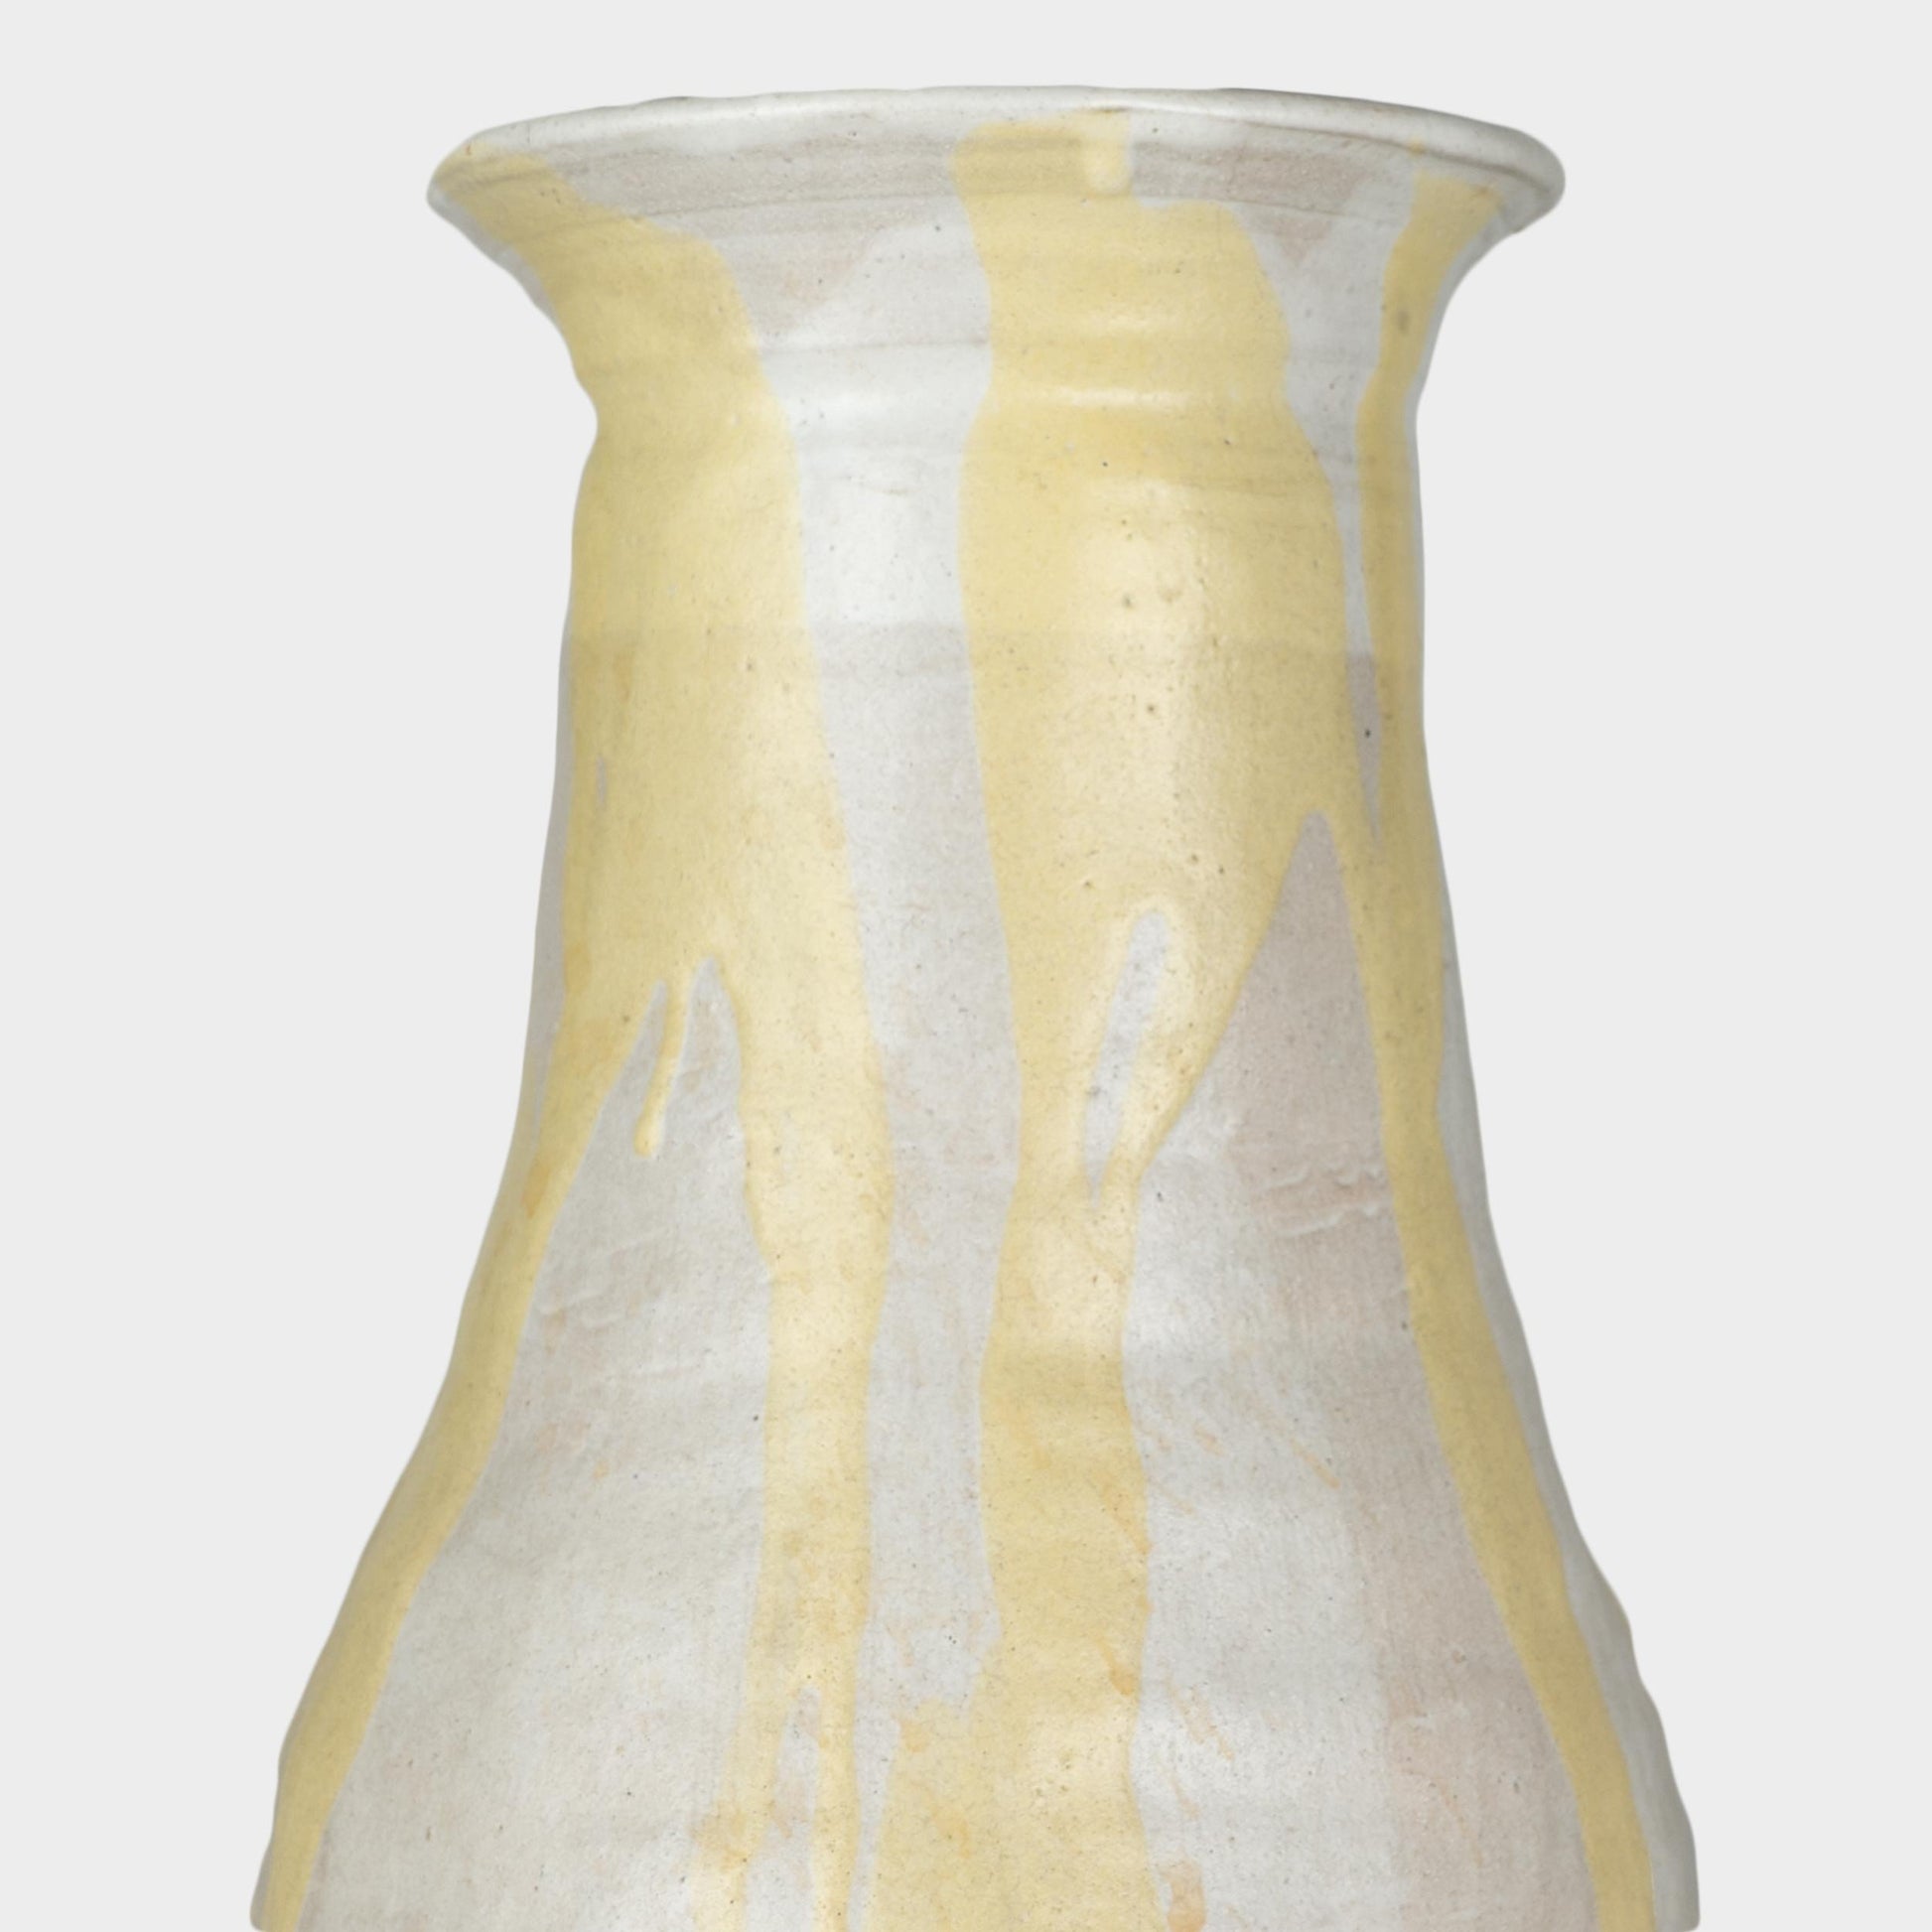 Vintage Art Pottery Yellow/ Grey Vase, Arizona, 1977